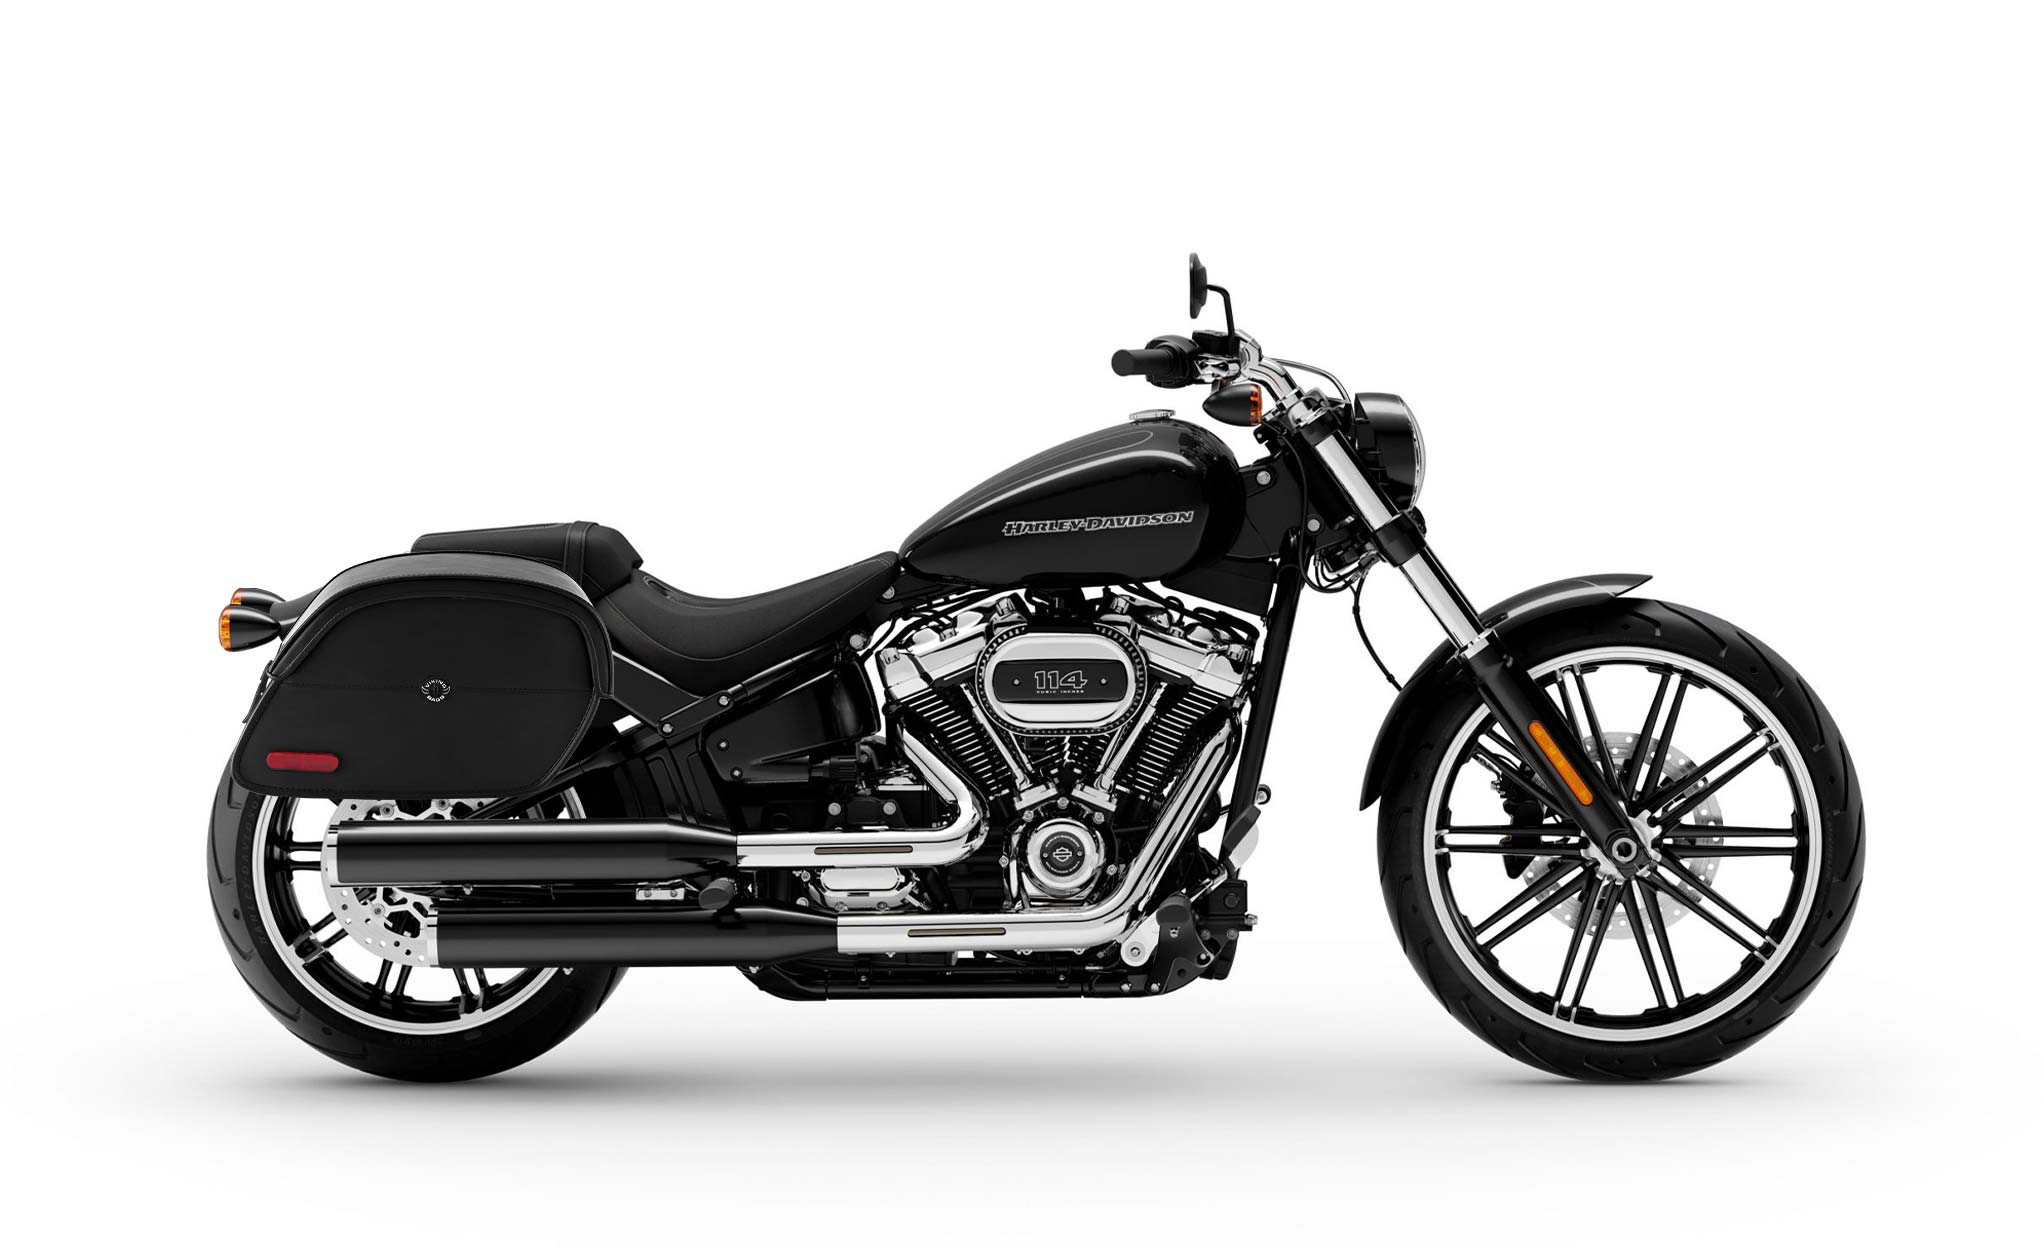 Viking California Large Leather Motorcycle Saddlebags For Harley Davidson Softail Breakout 114 Fxbr S on Bike Photo @expand